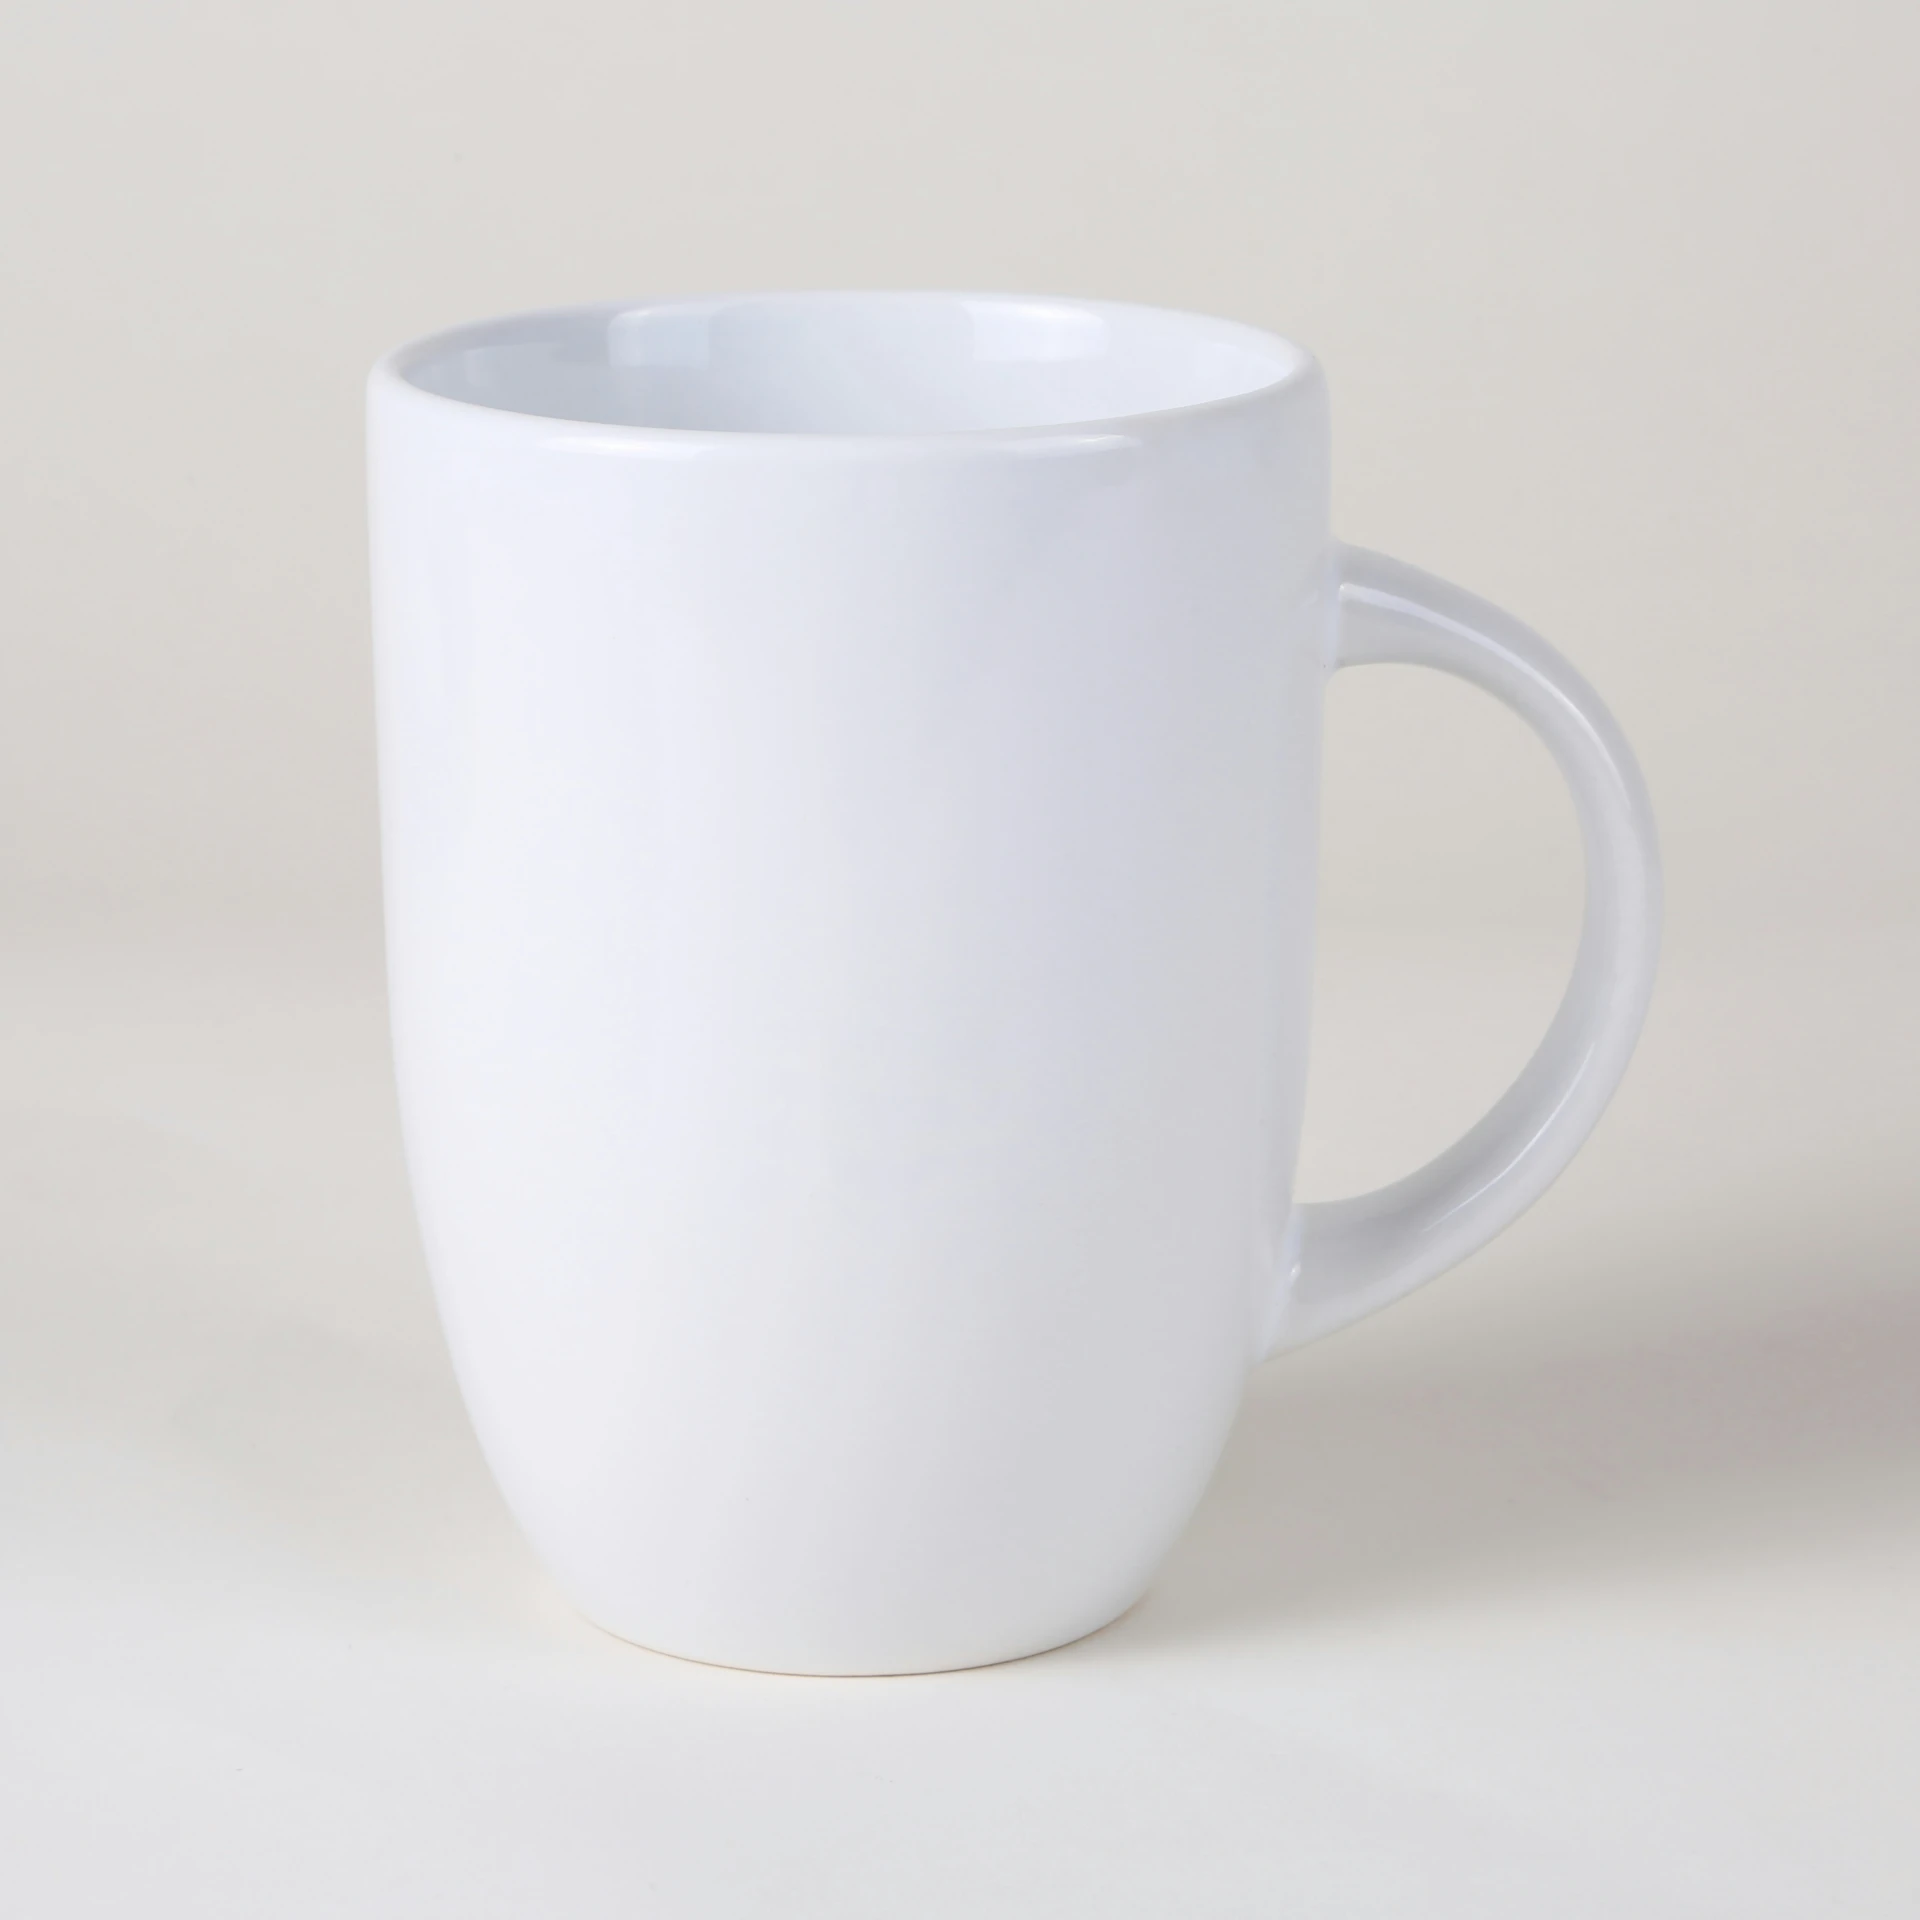 the white coffee mug has a white rim